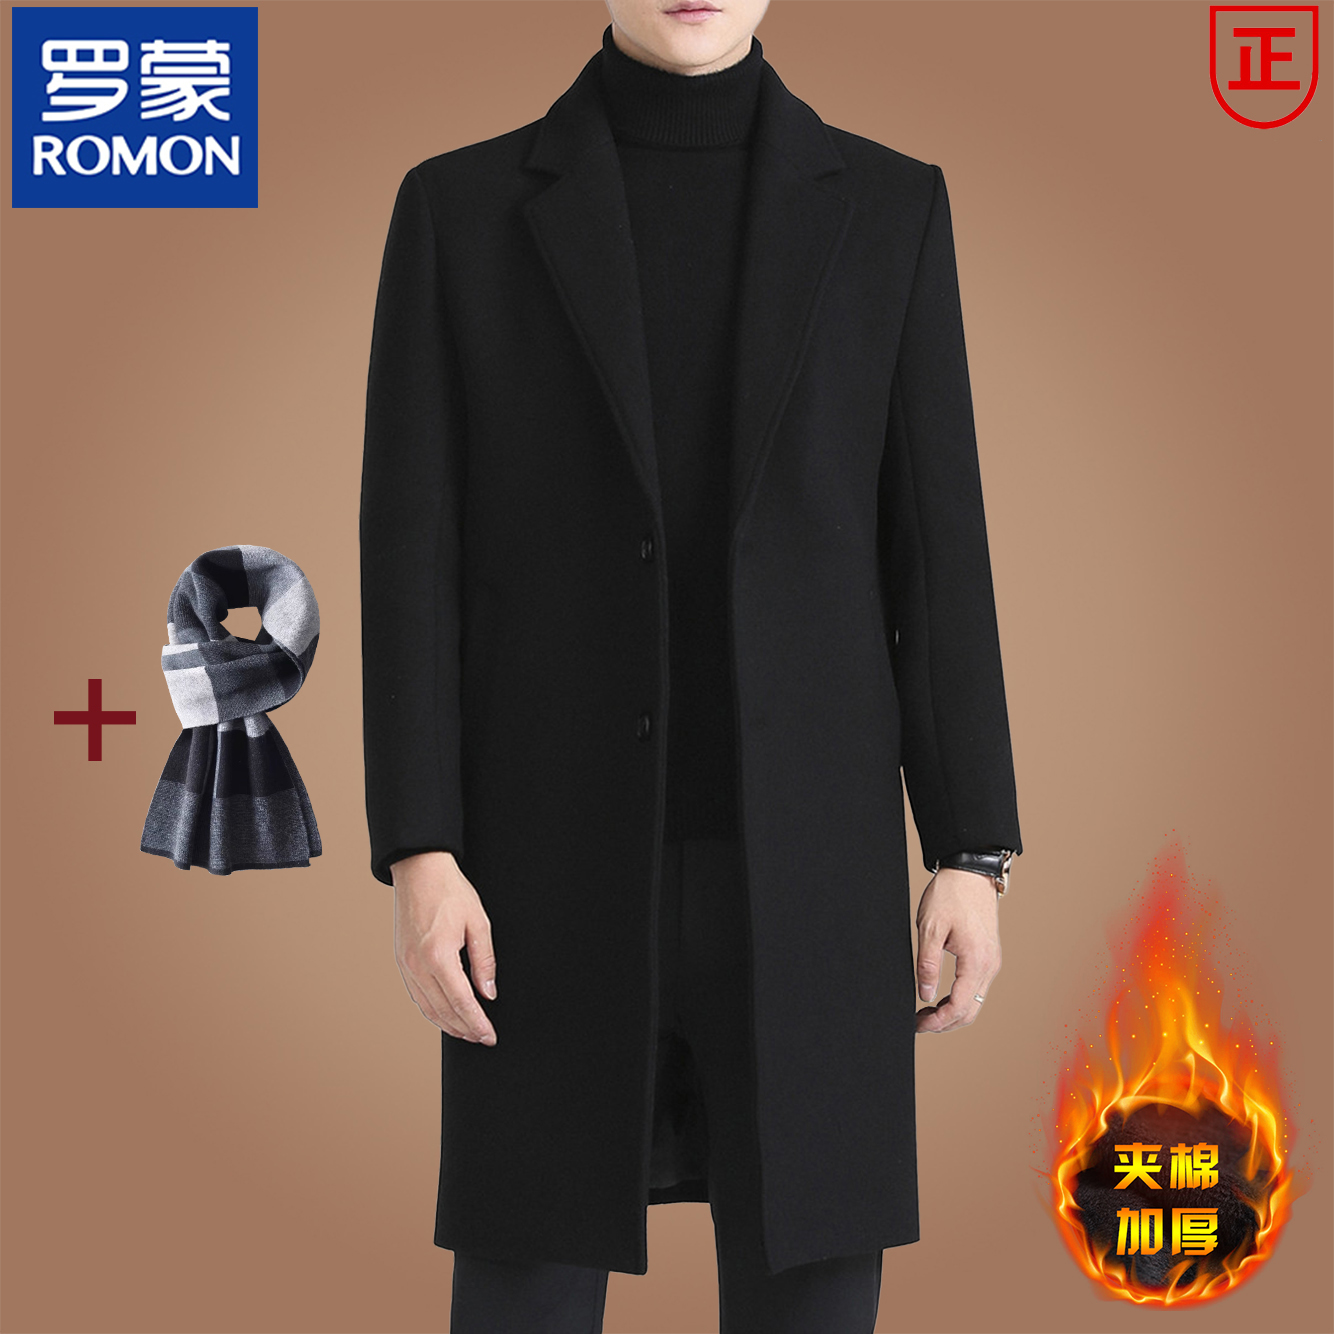 Romon Wool Coat Men's Mid length Korean casual men's mid youth windbreaker winter thickened woolen jacket